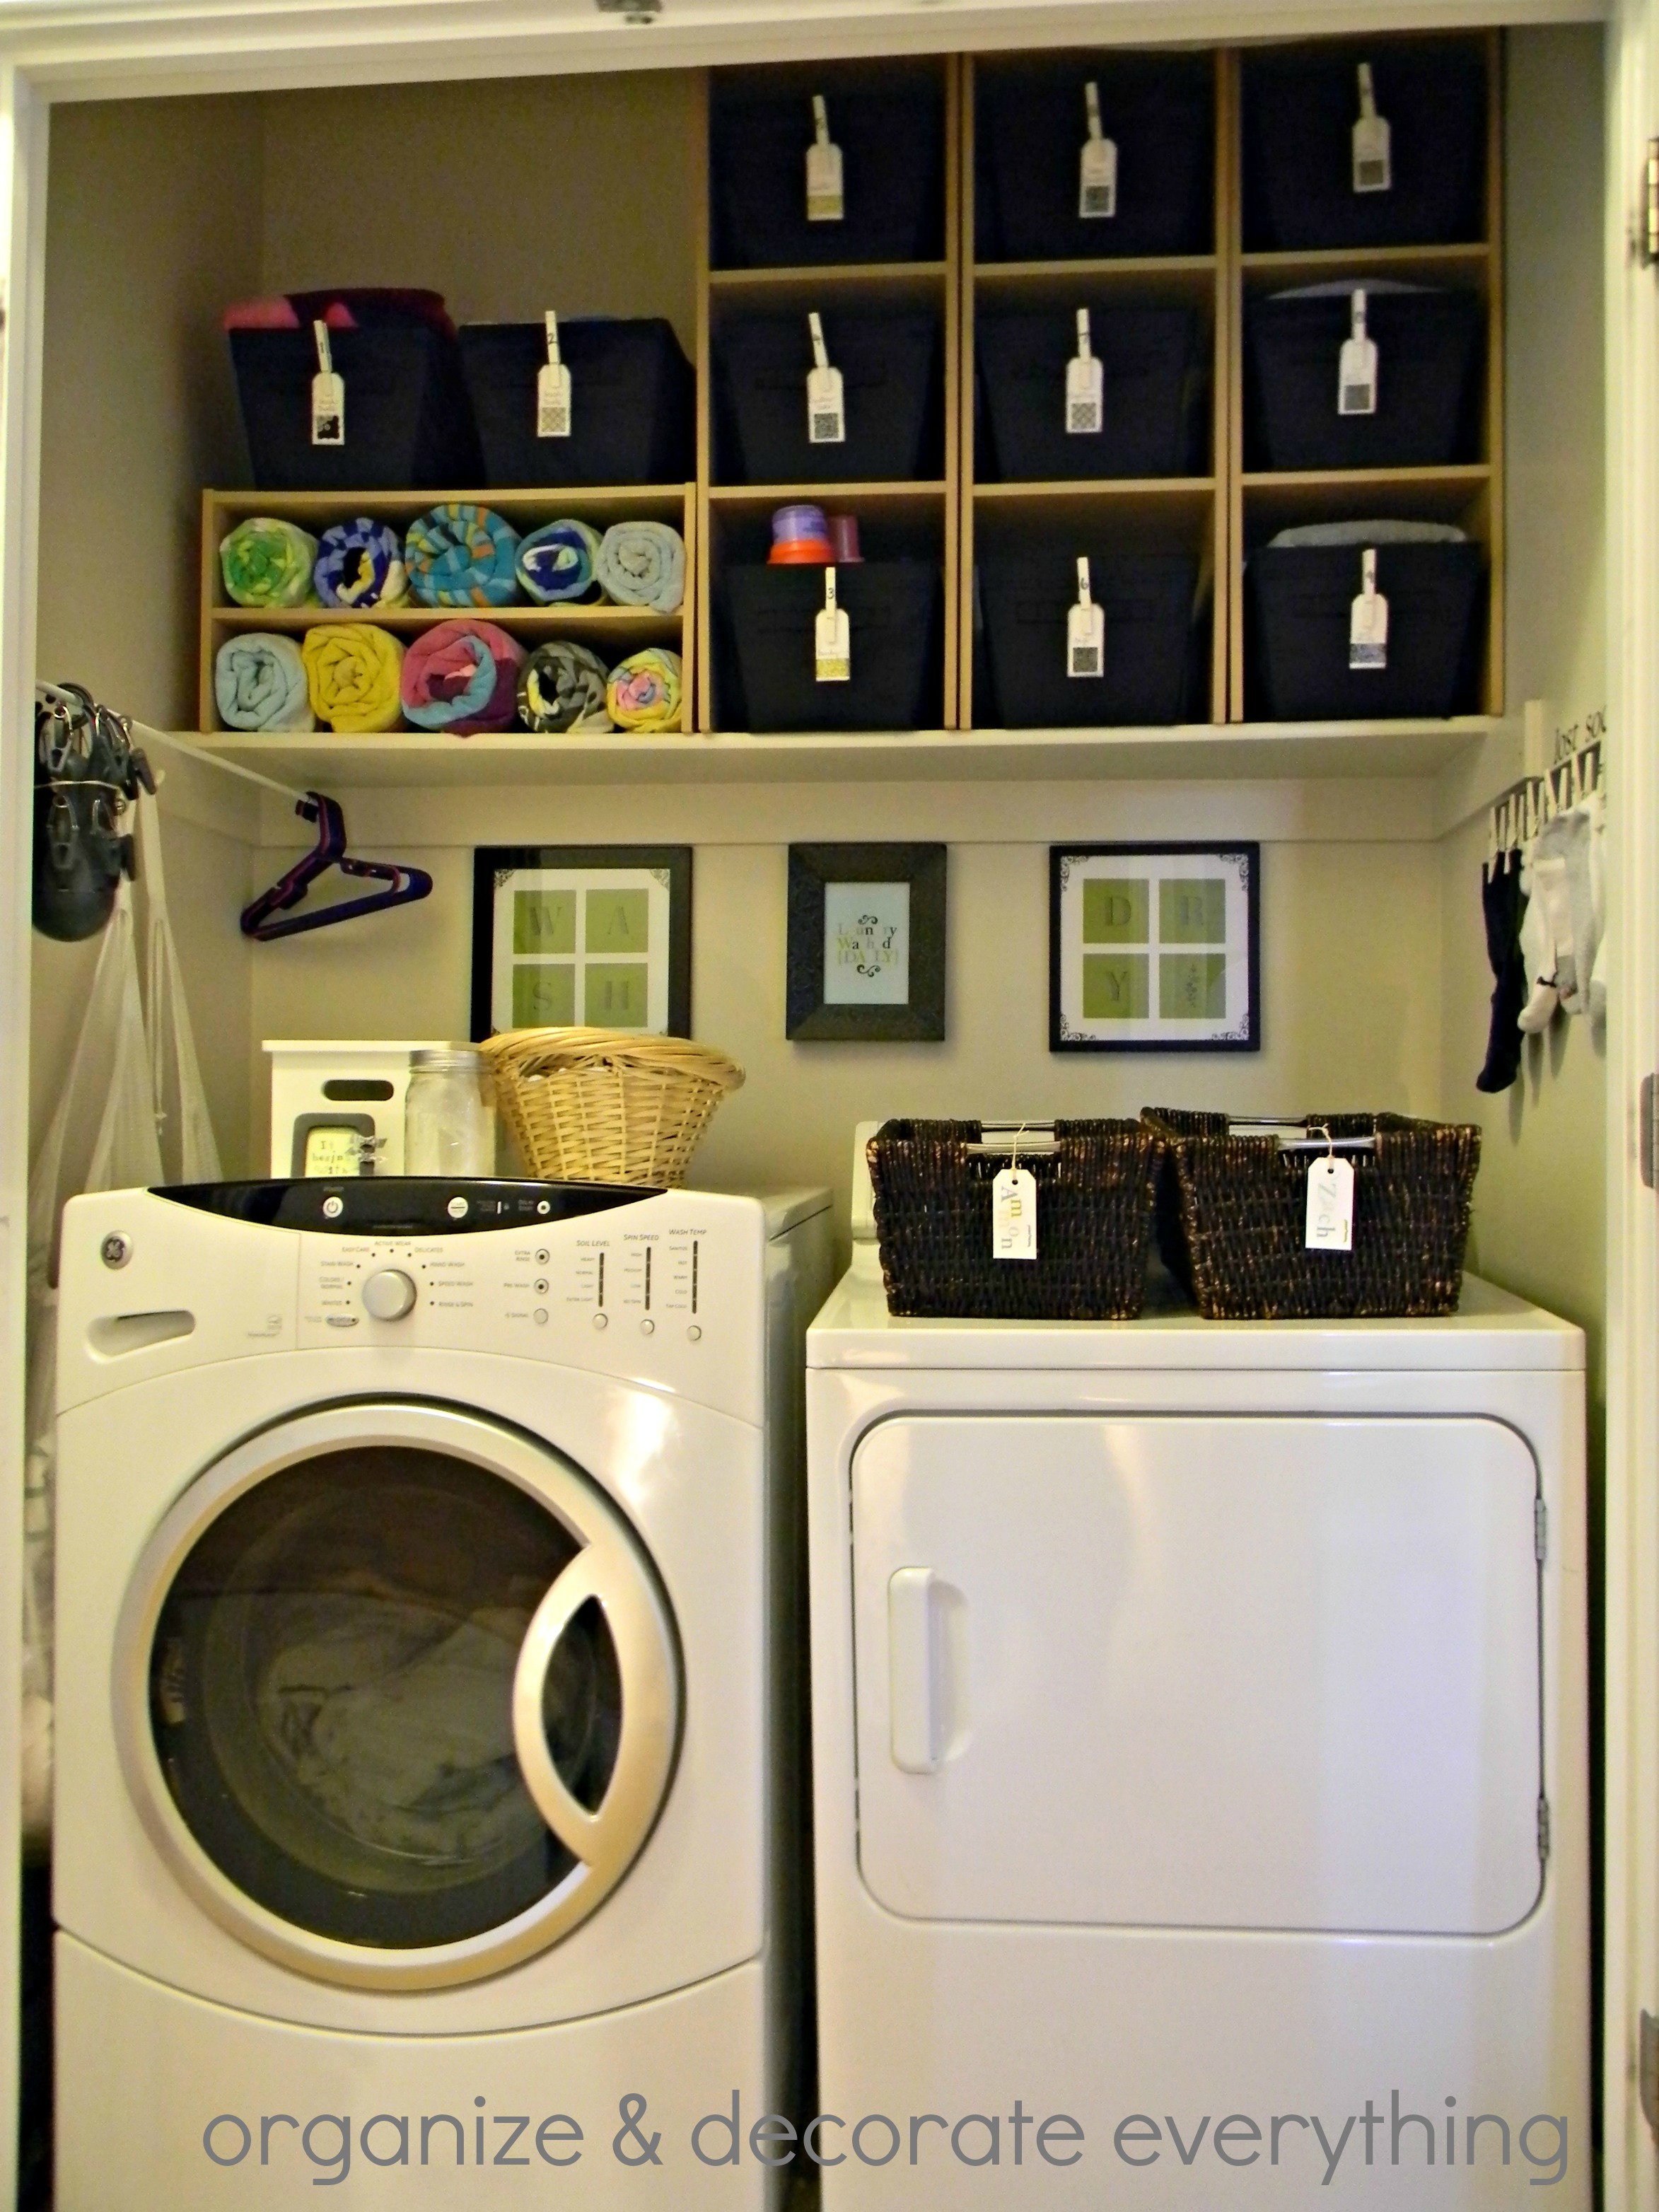 https://organizeyourstuffnow.com/wp-content/uploads/2012/12/Organize-Decorate-Everything-laundry-room.11.jpg